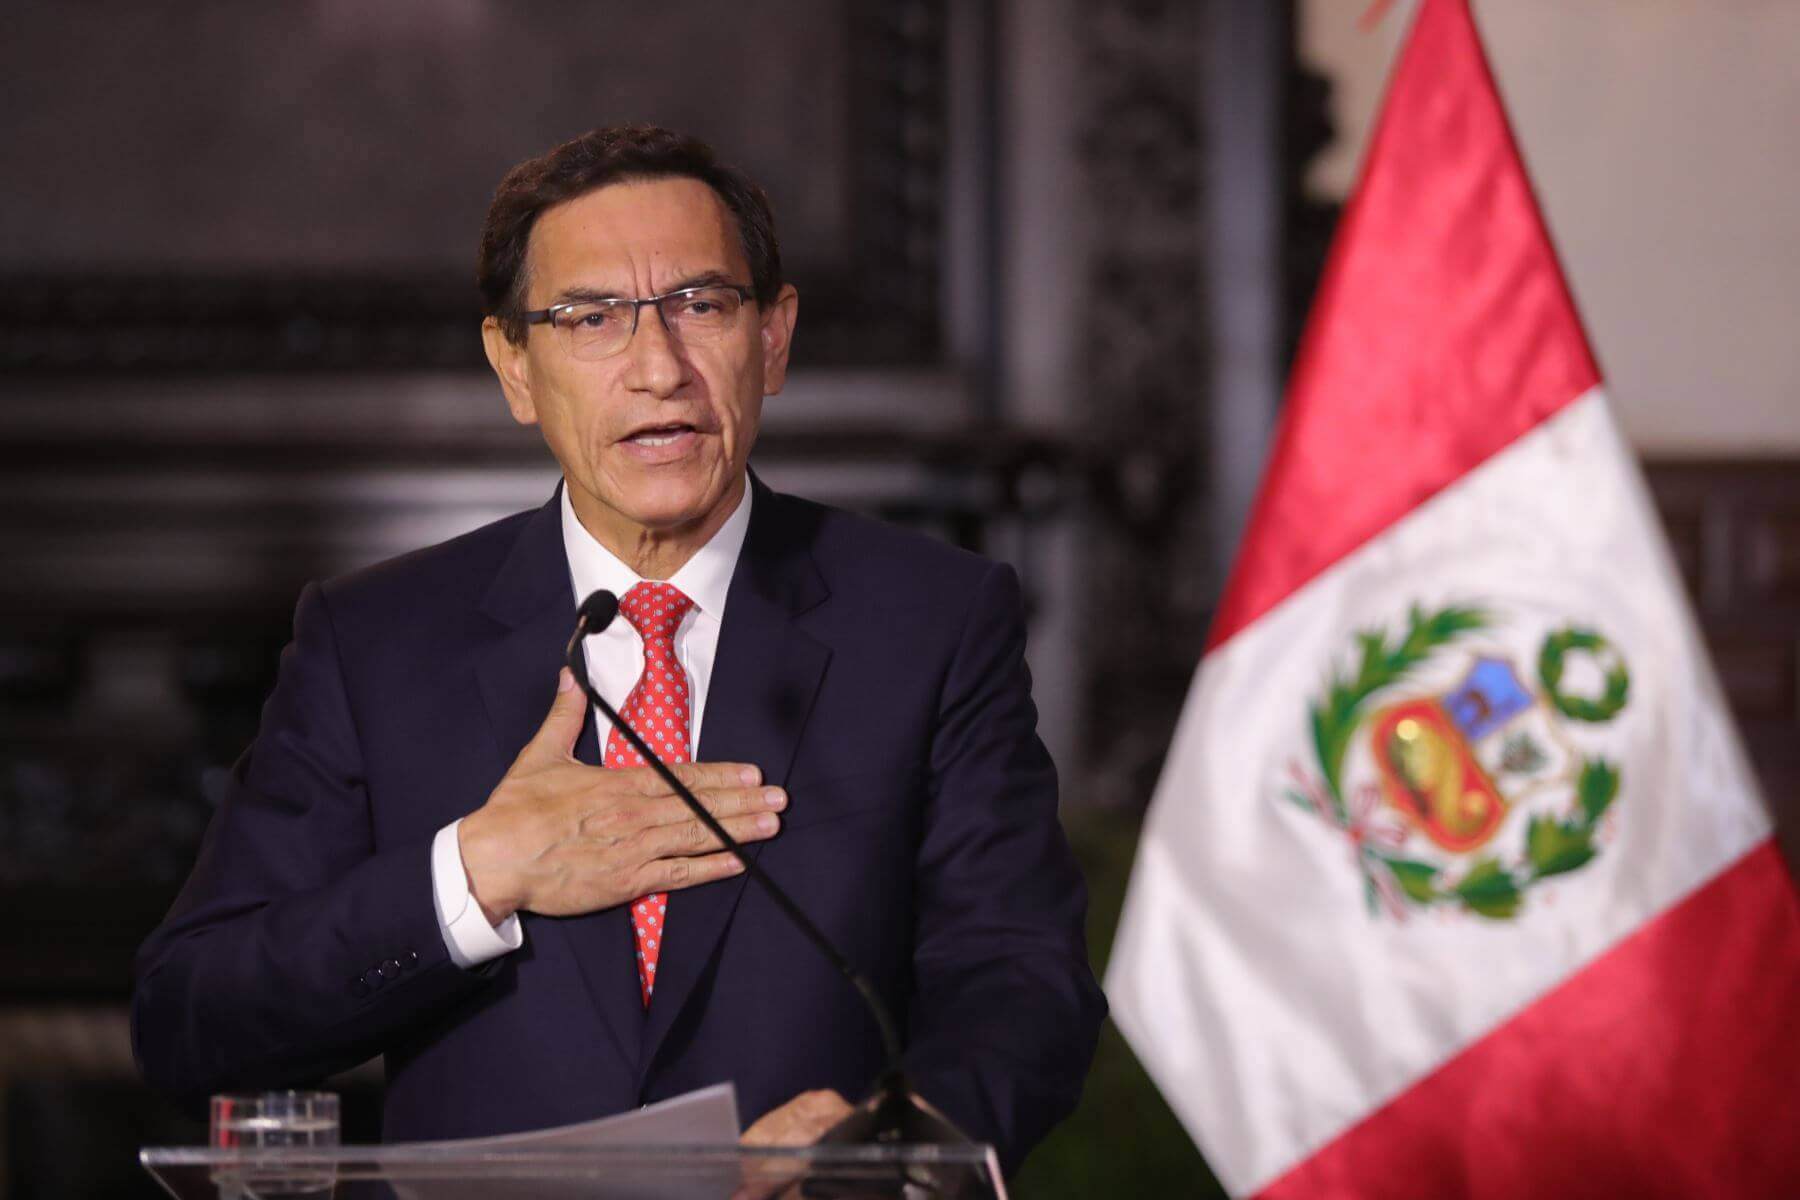 Peruvian Congress Approves Motion to Launch Impeachment Vote Against President Vizcarra